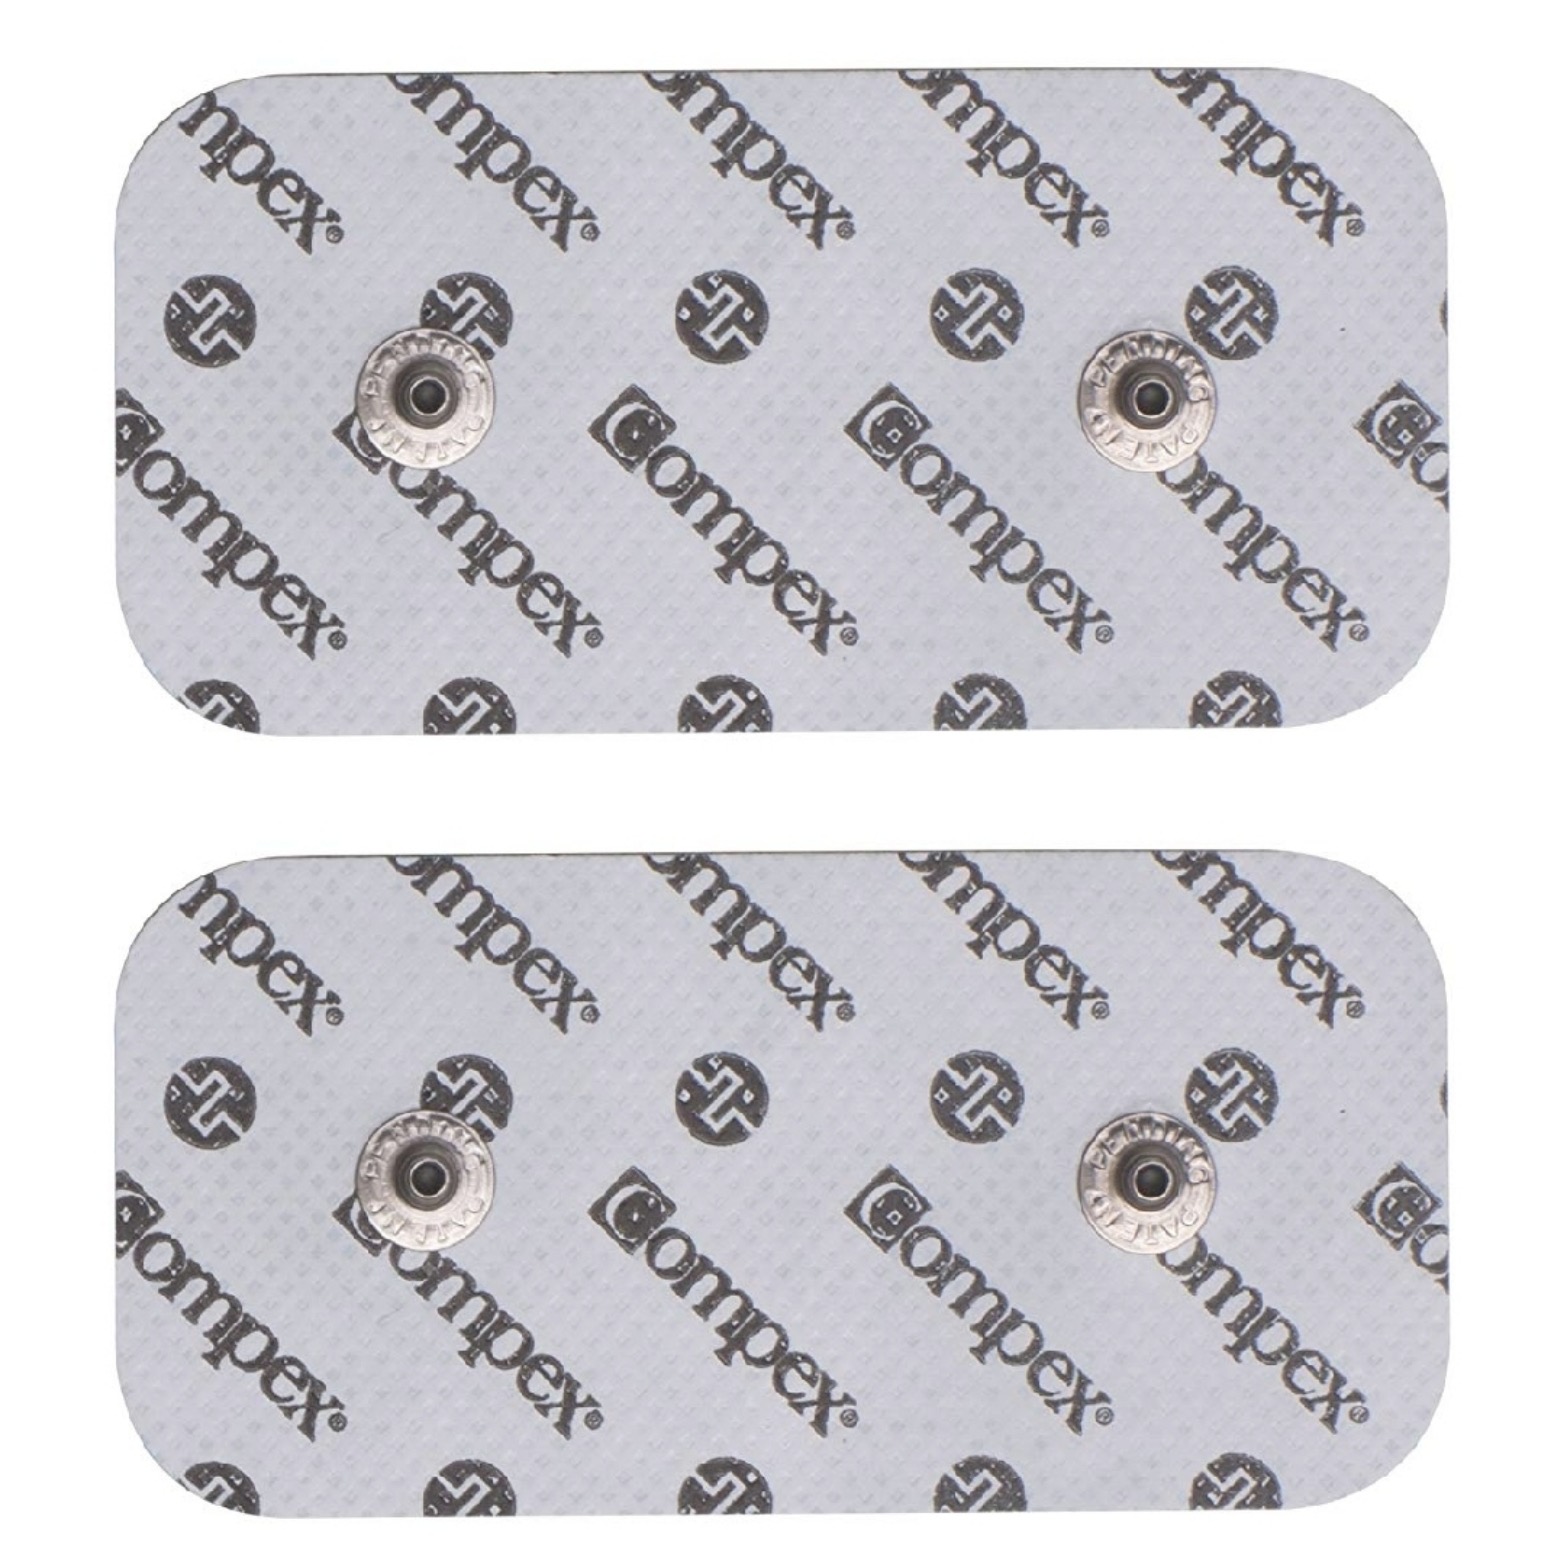 COMPEX Pack 10 Electrodos auto adheribles 2¨x5¨ Easy Snap – JP Medic